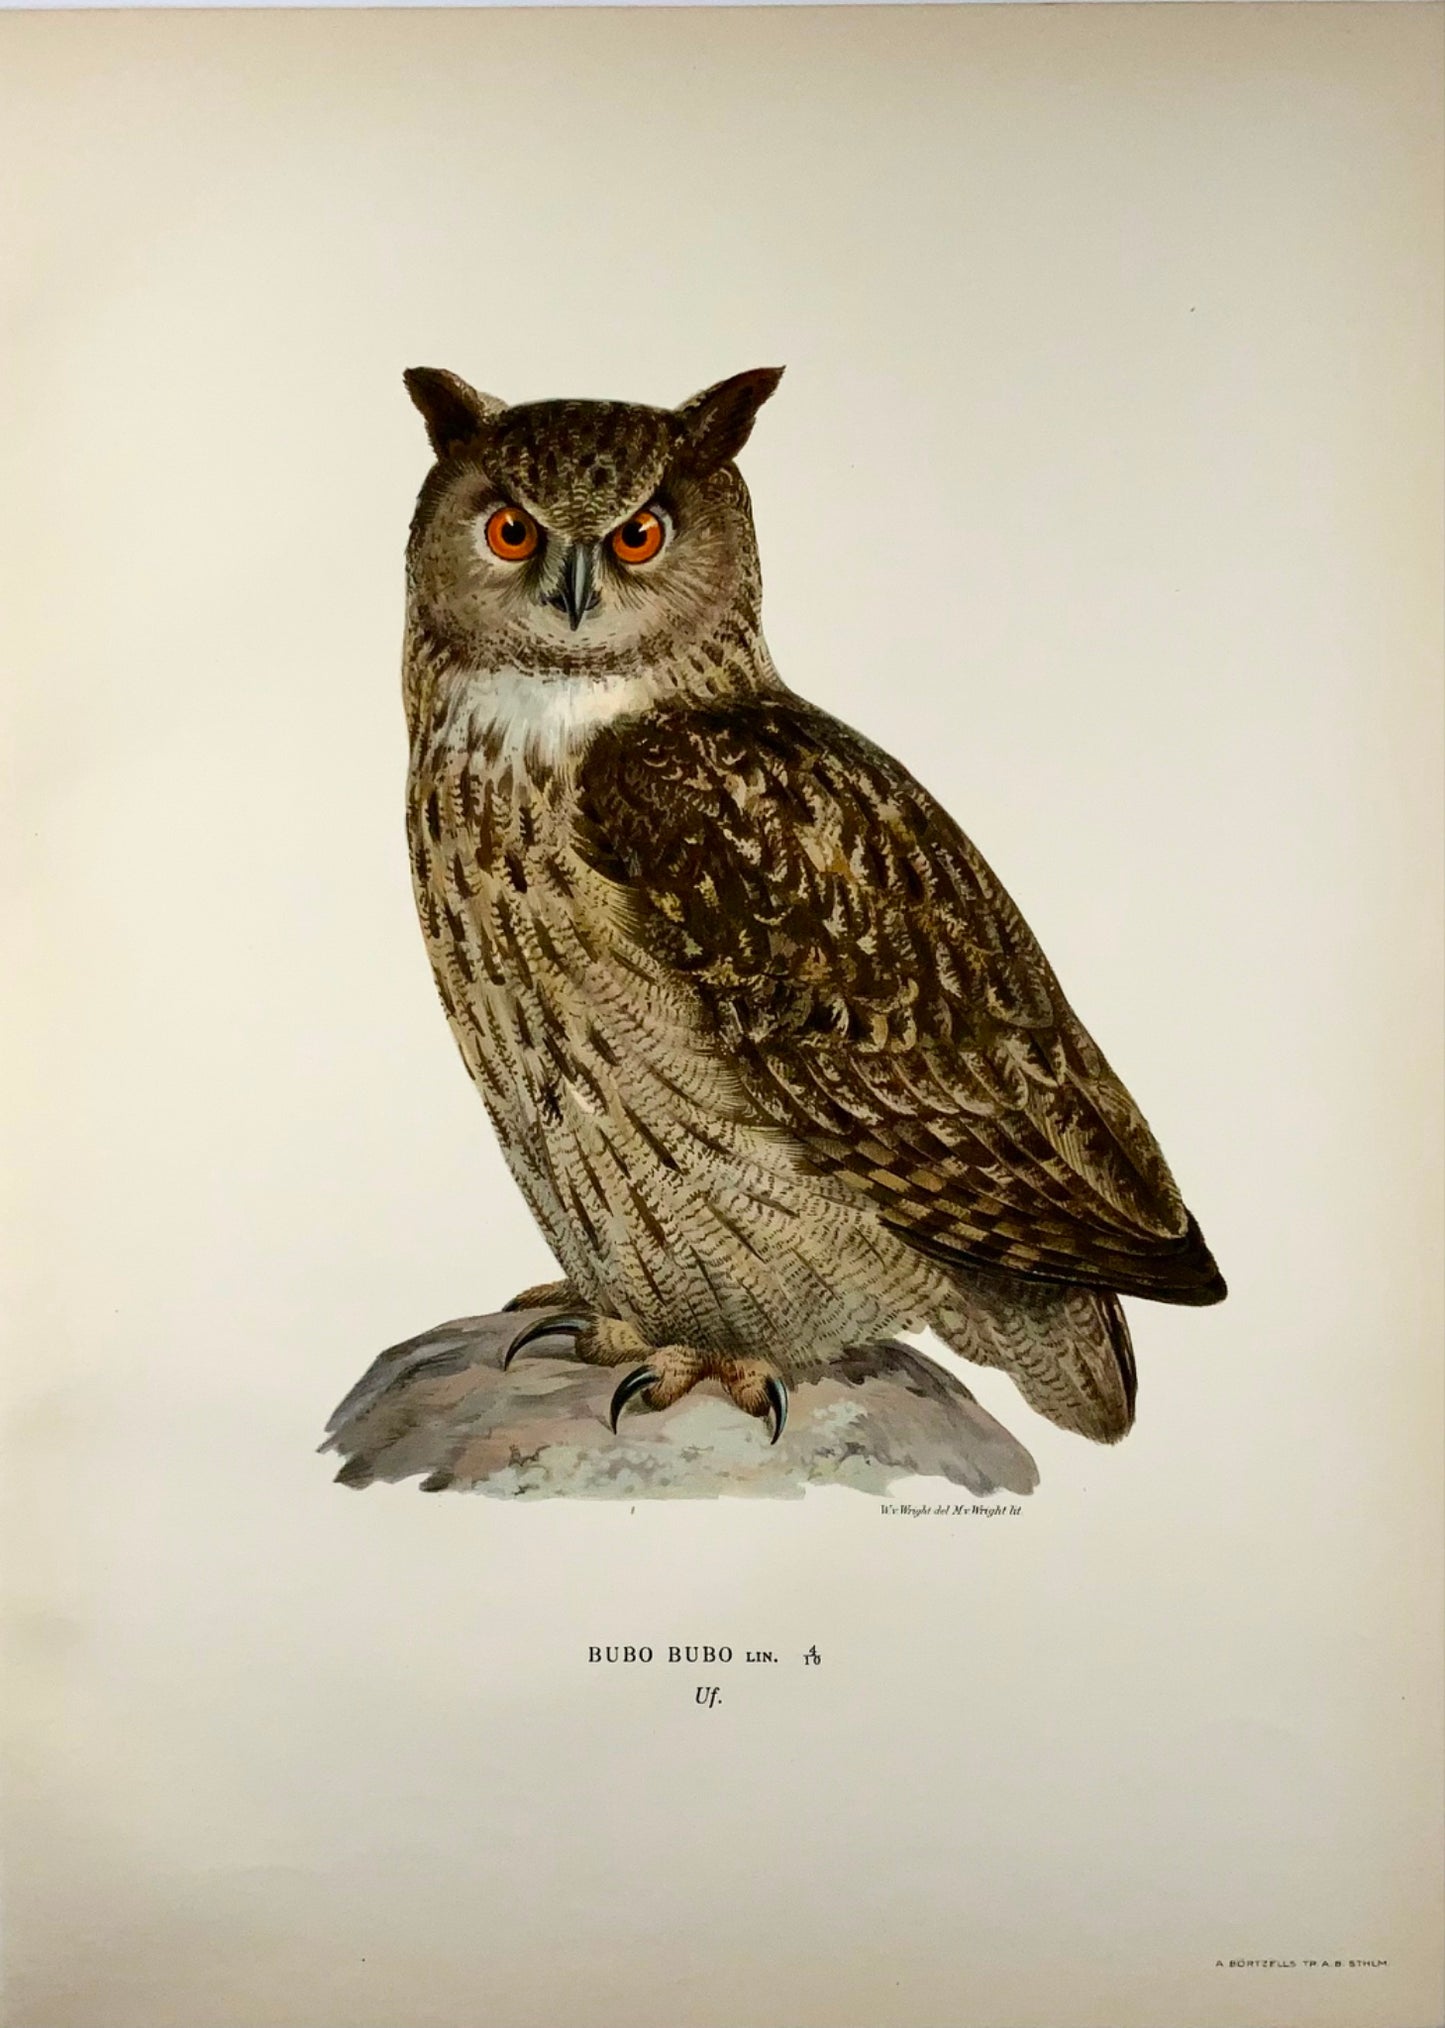 1918 Von Wright, Eagle Owl, large folio lithograph, ornithology